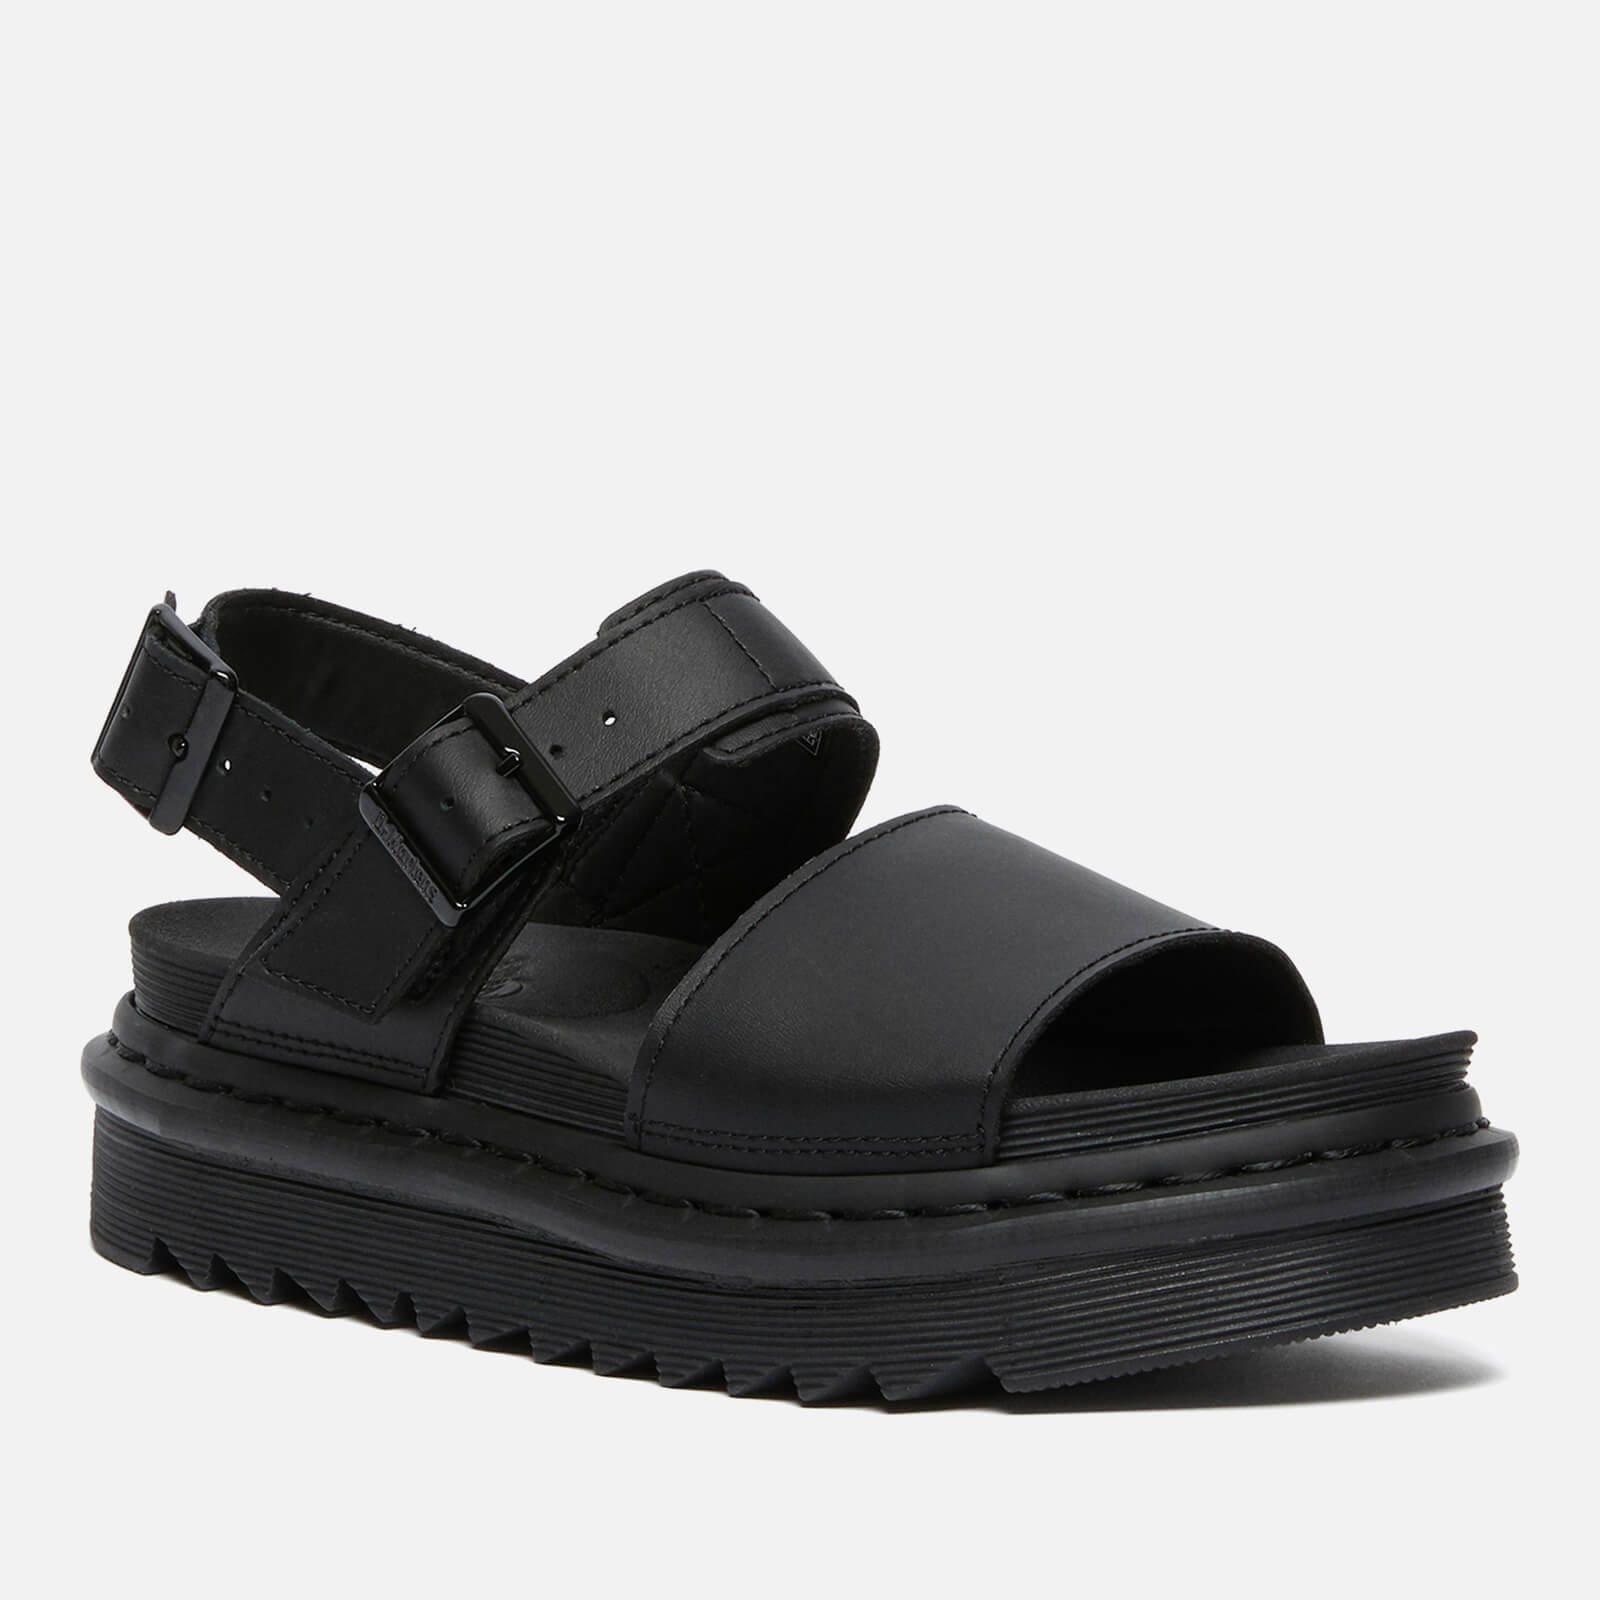 Dr. Martens Women’s Voss Leather Strap Sandals - Black